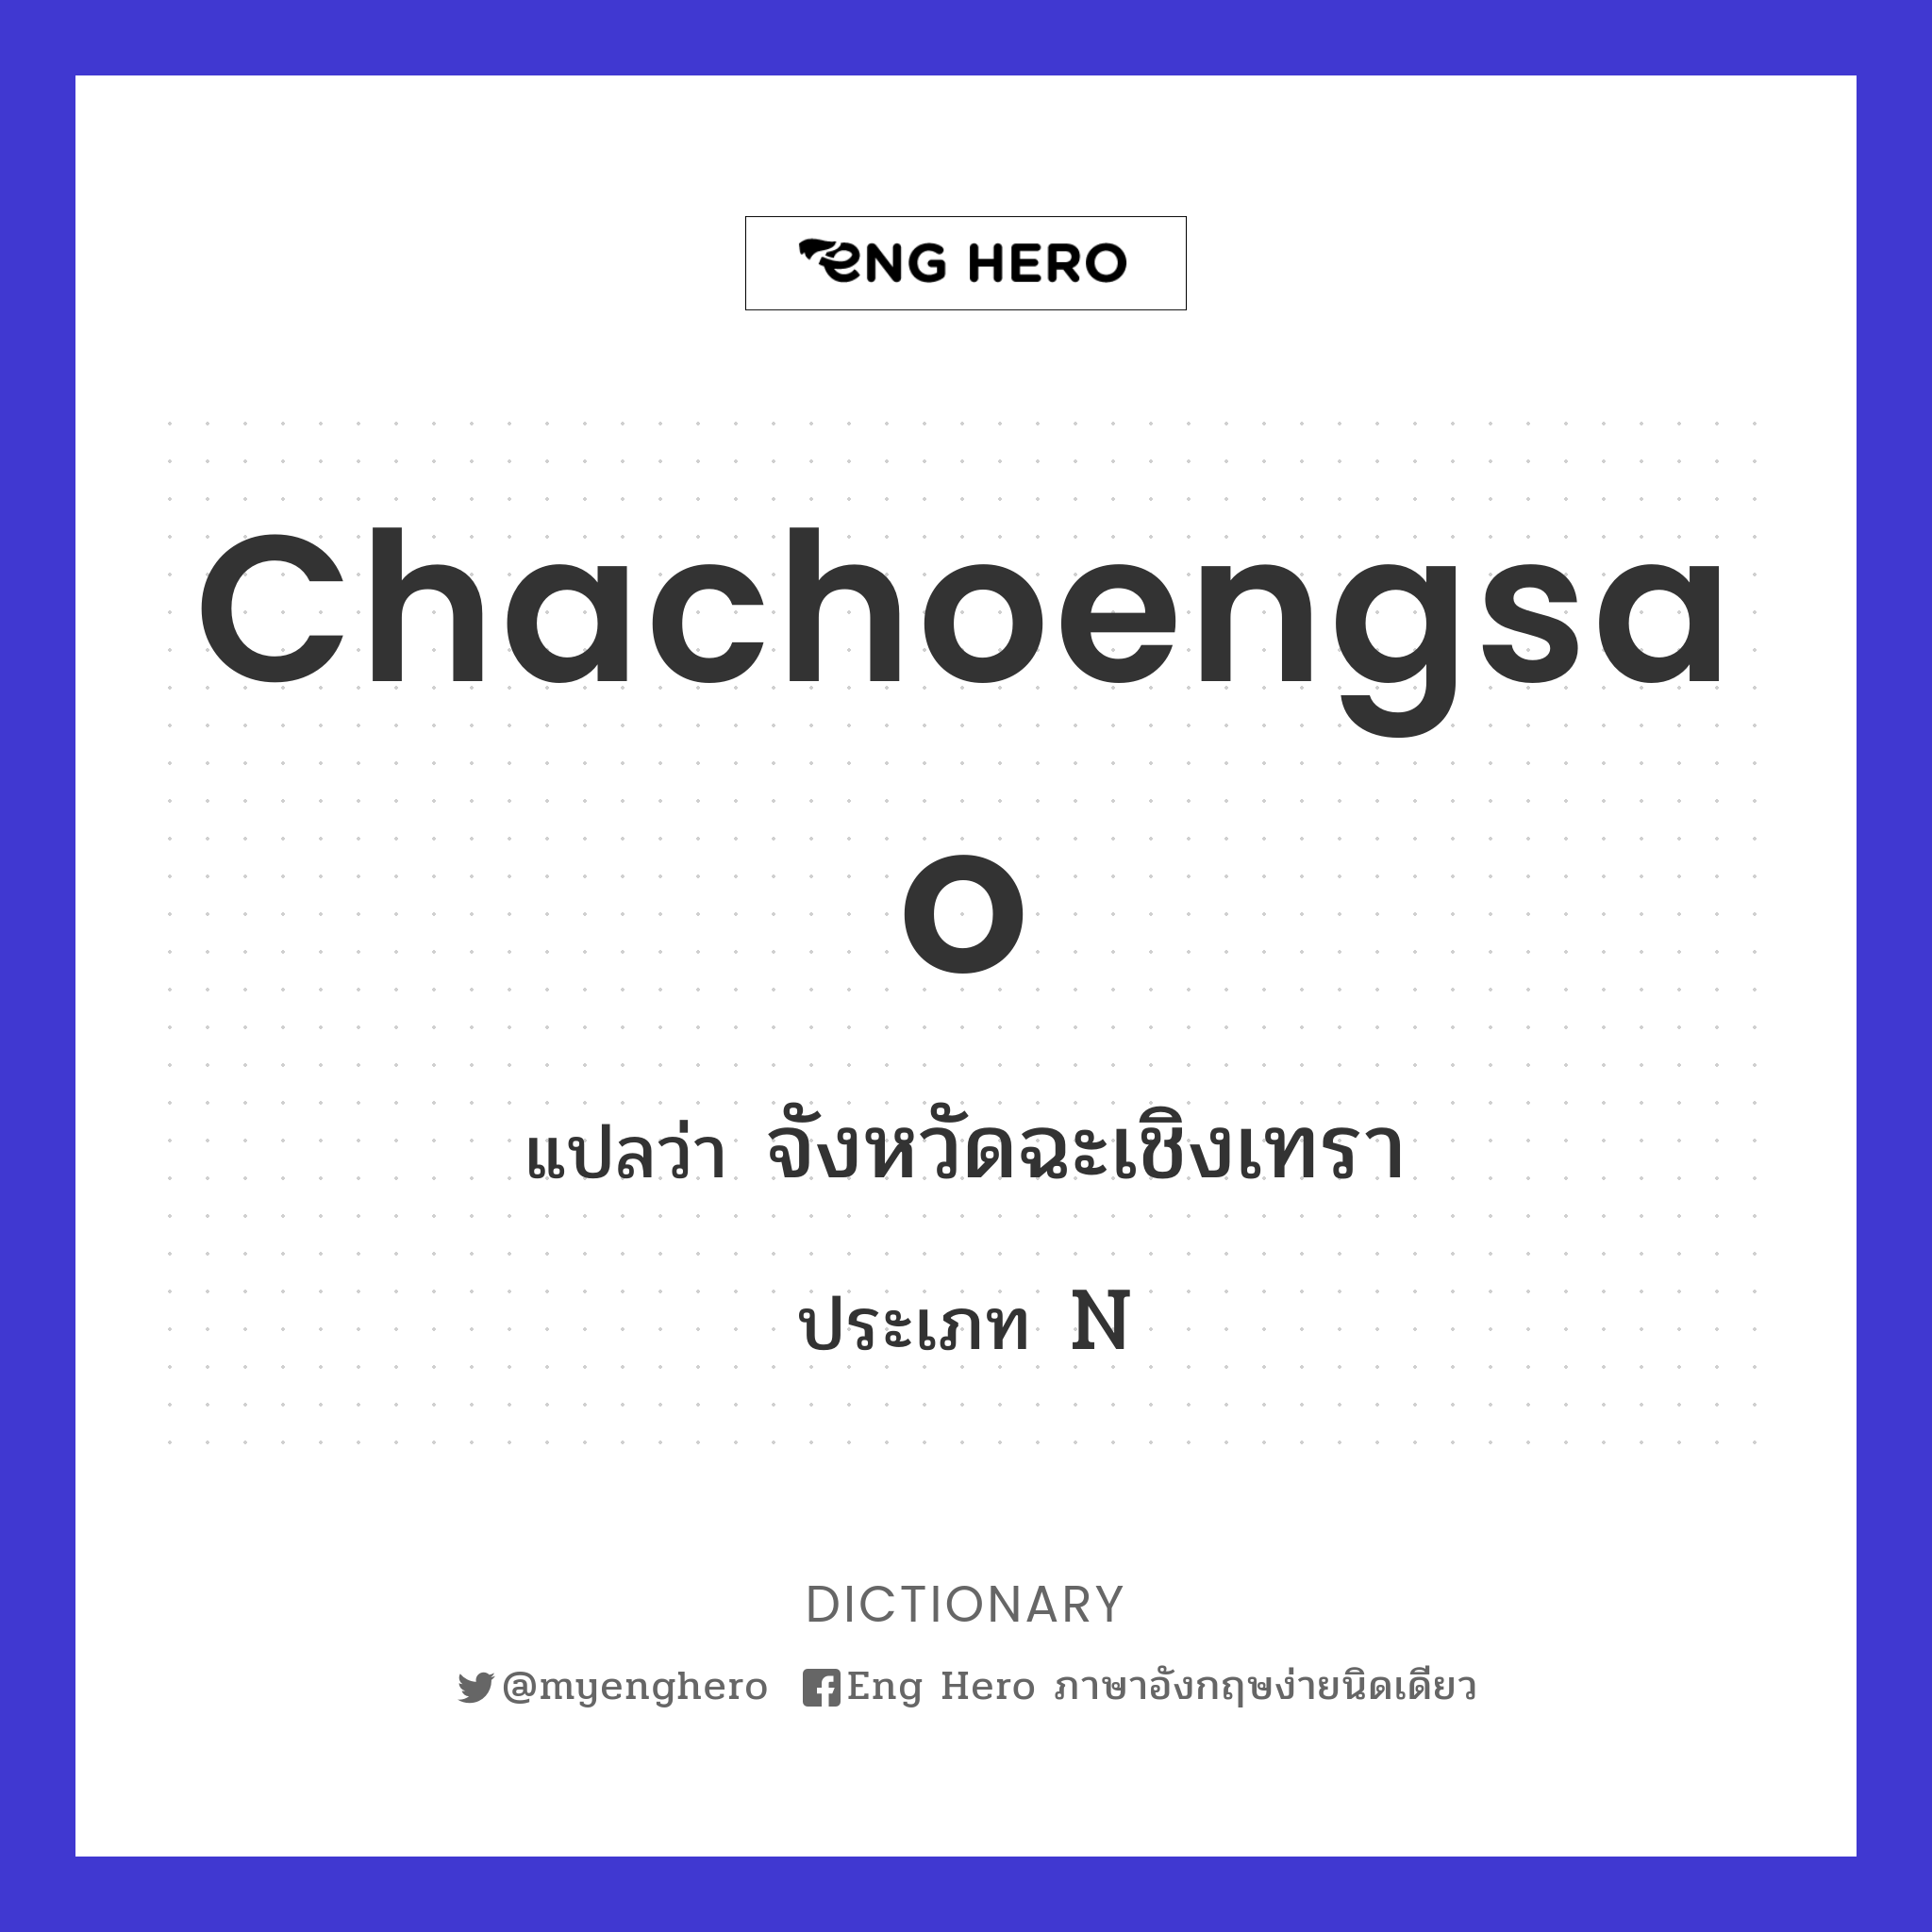 Chachoengsao